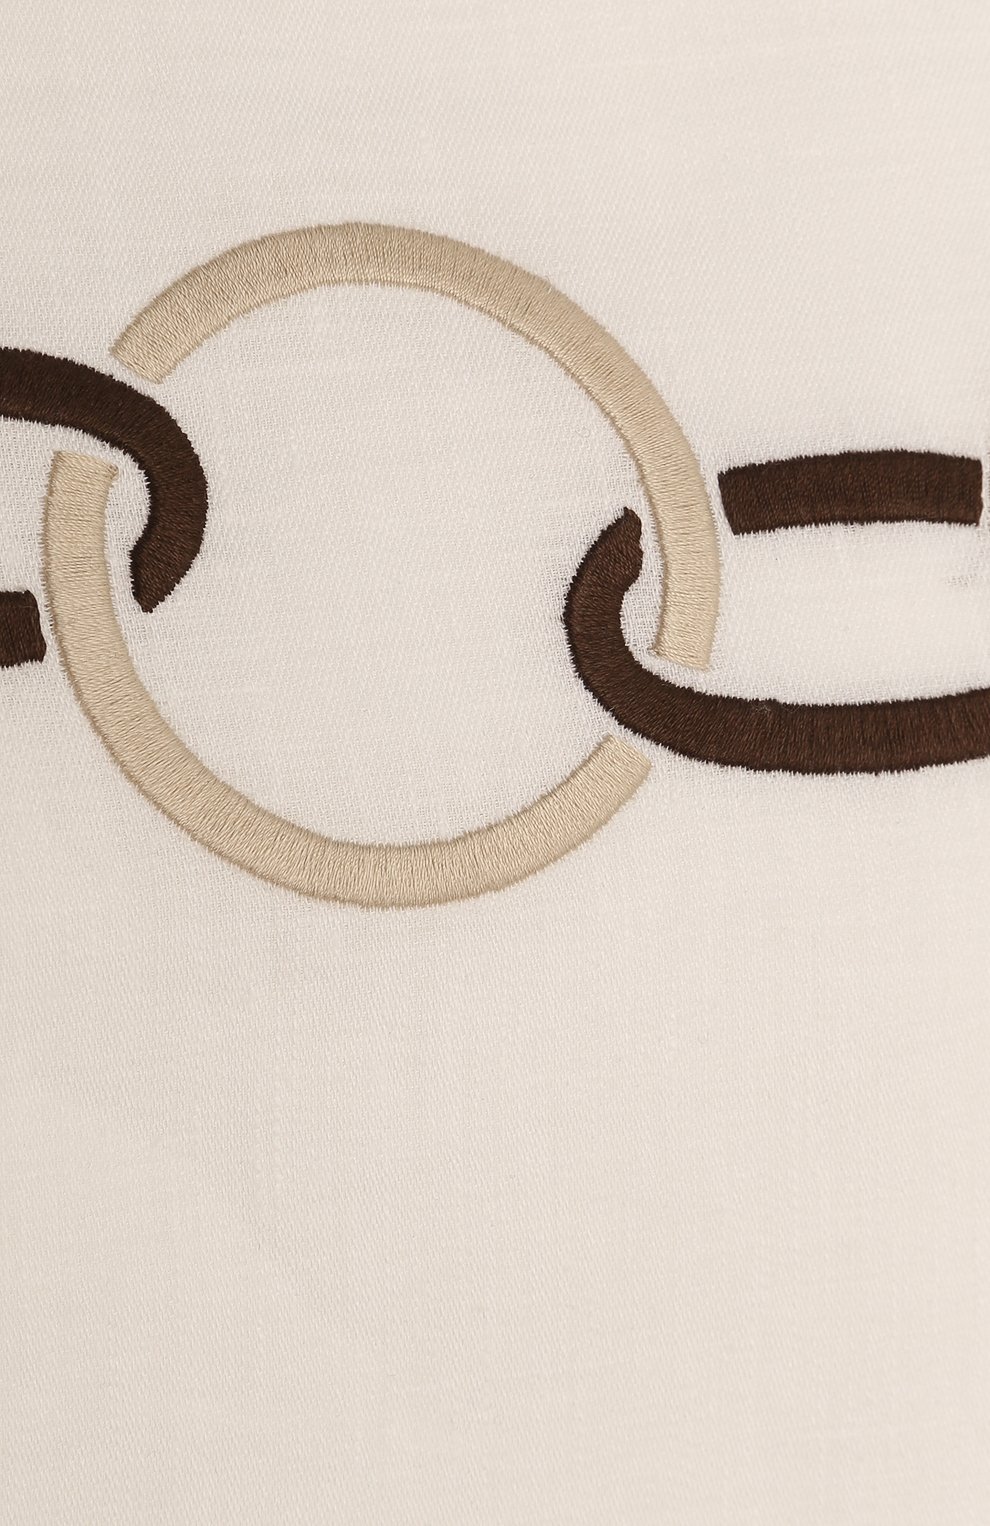 Комплект постельного белья FRETTE бежевого цвета, арт. FR6740 E3491 240B | Фото 6